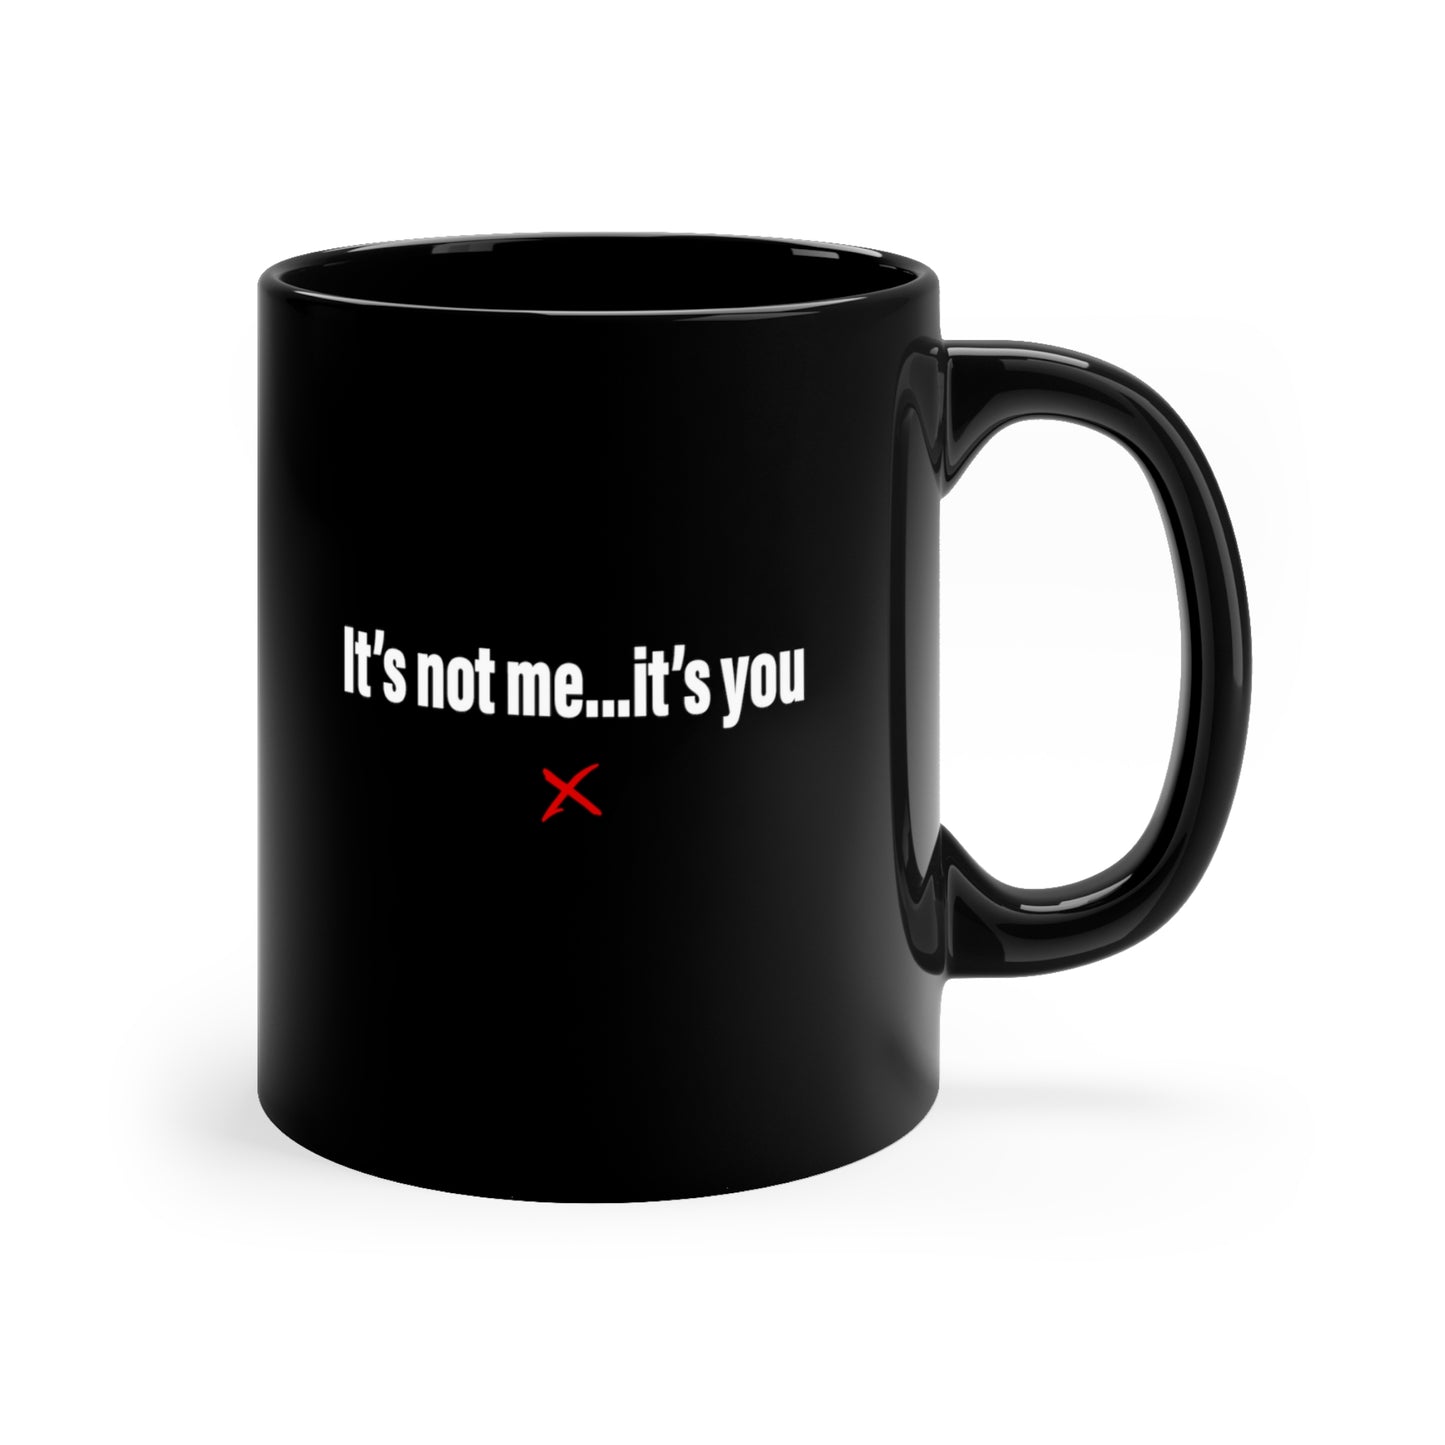 It's not me...it's you - Mug